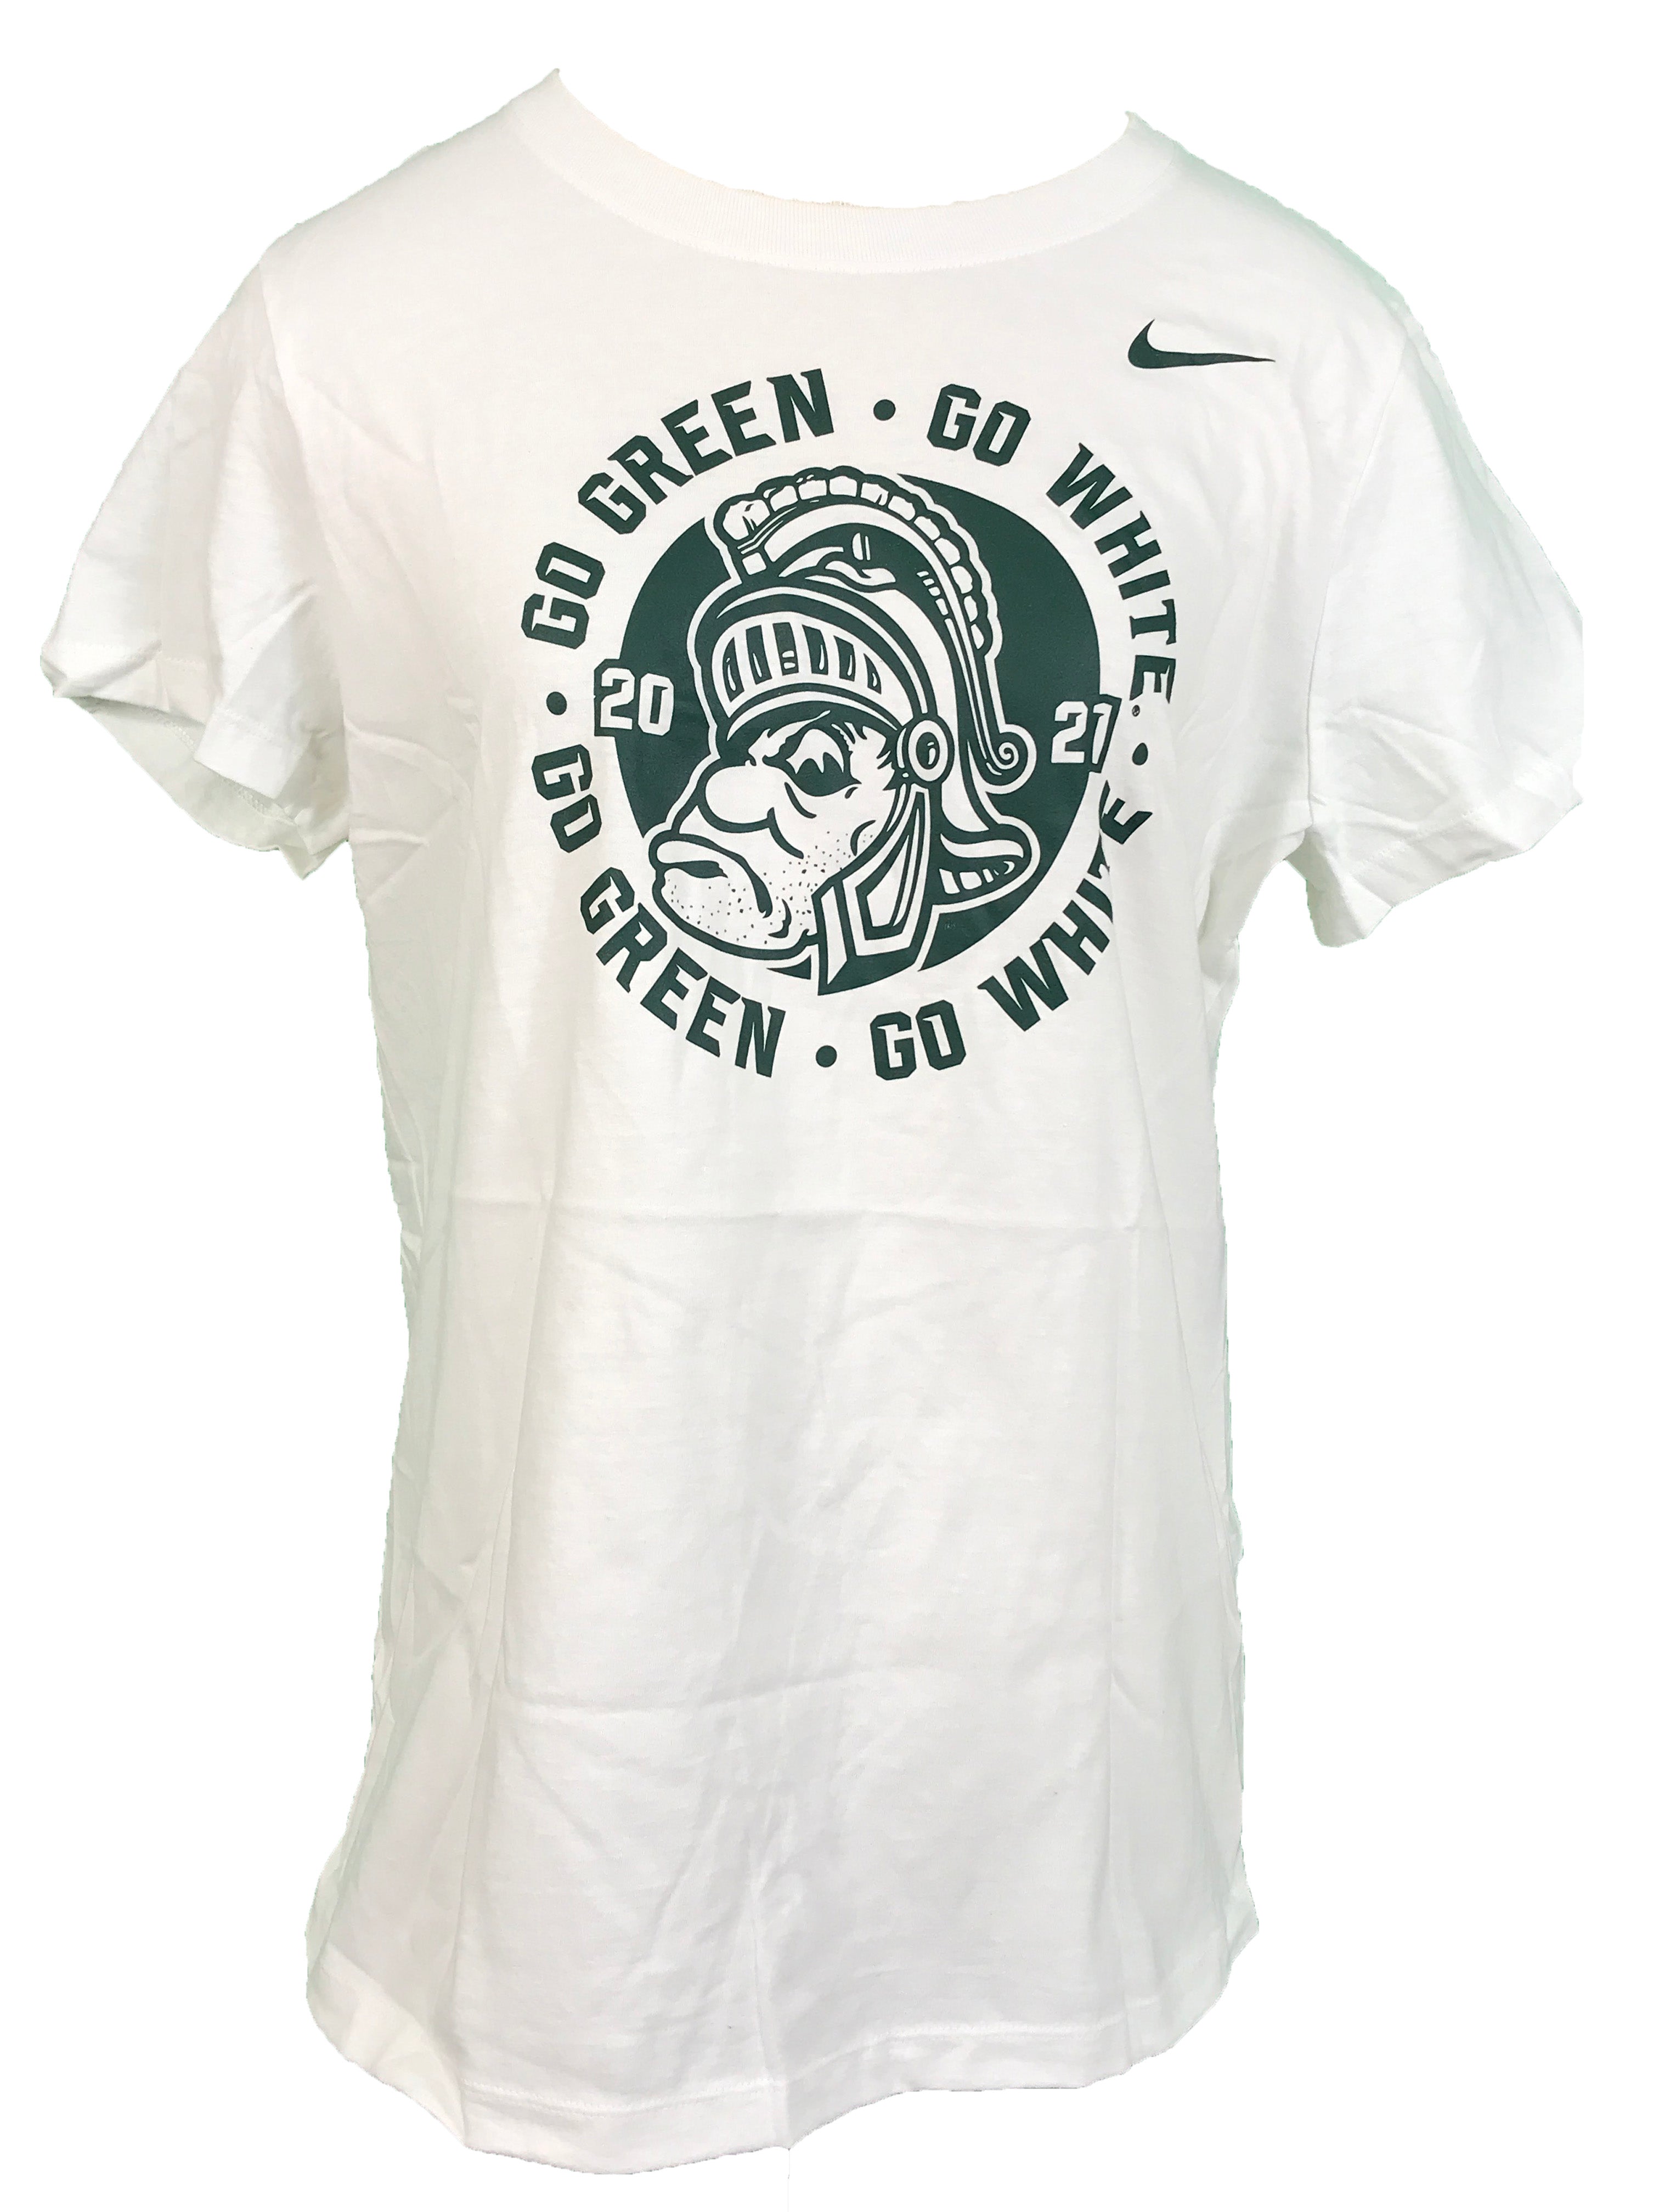 Nike White 2021 MSU Football T-Shirt Women's Size S